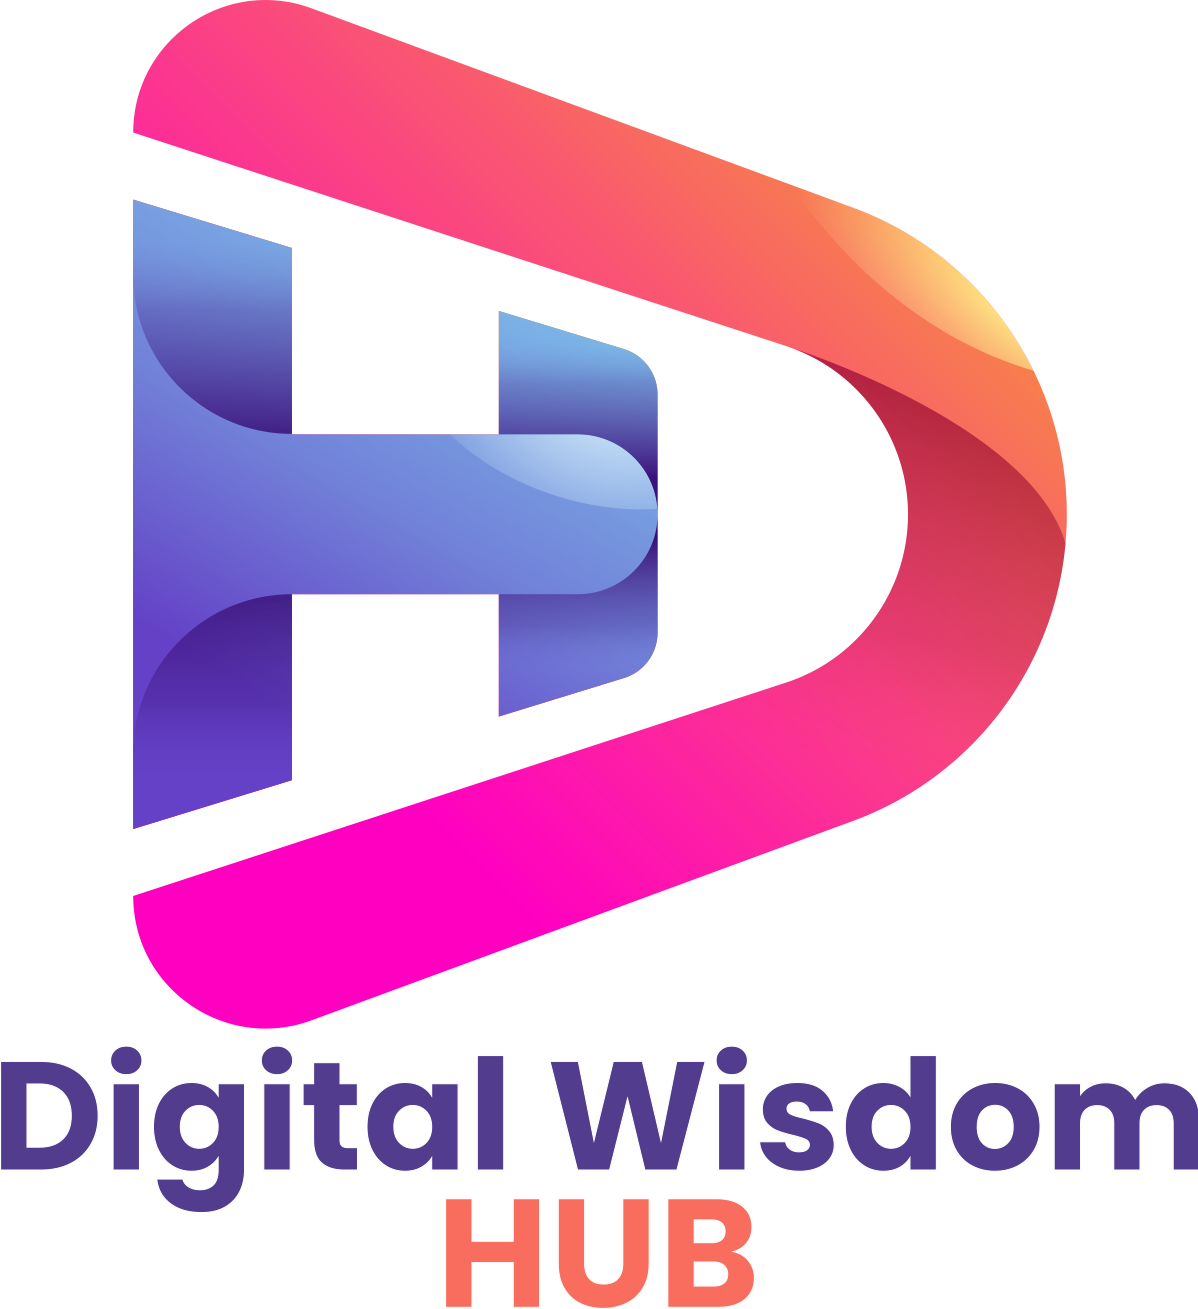 Digital Wisdom Hub Logo